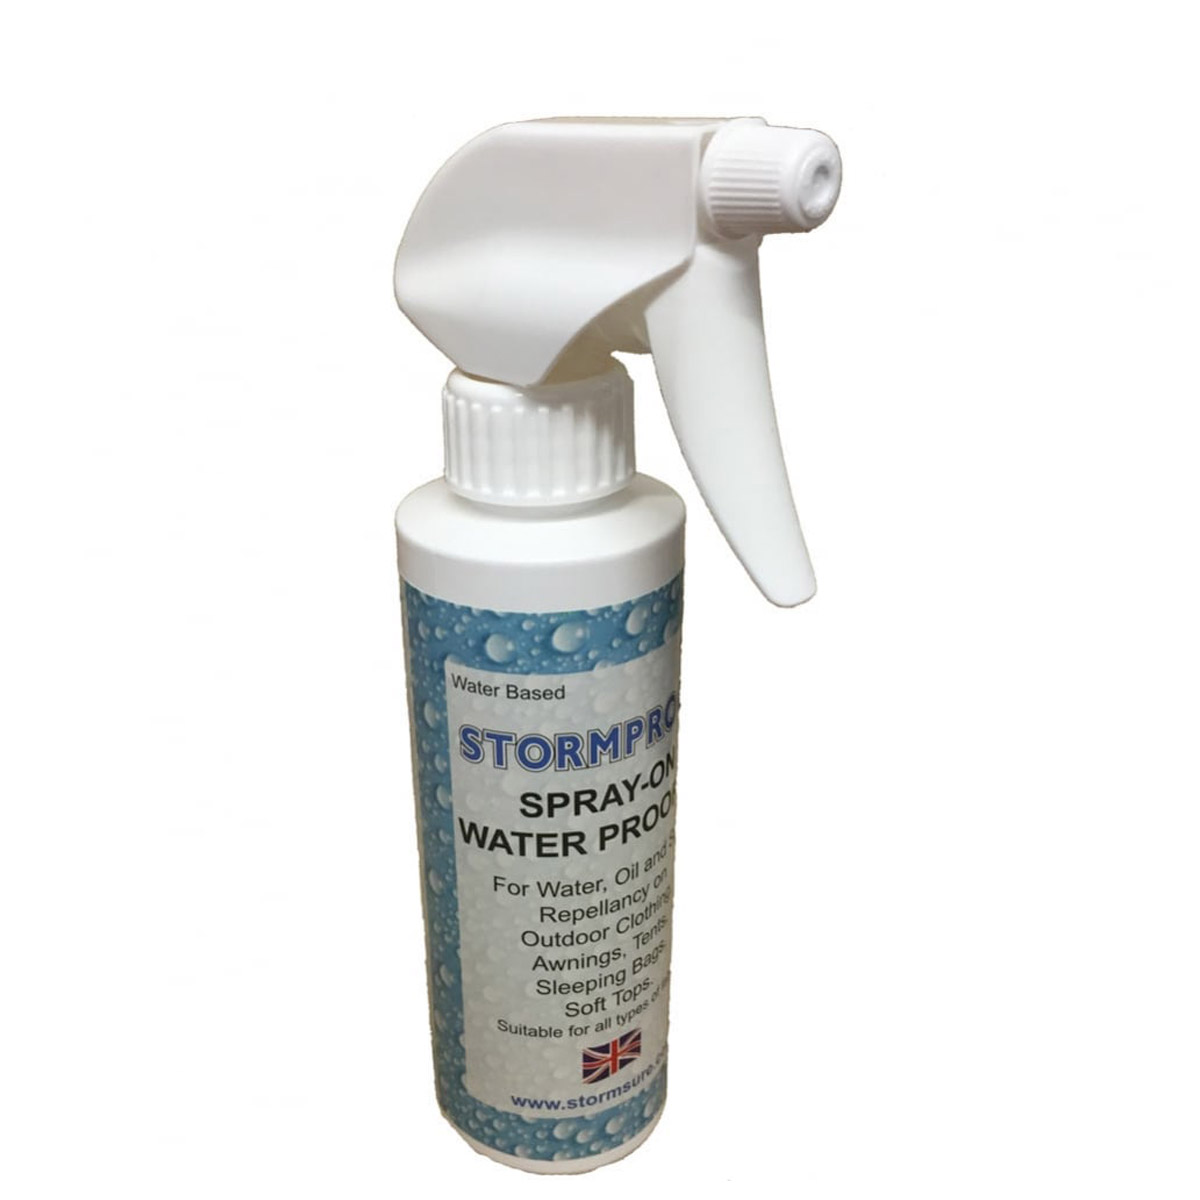 Stormproof Spray-on Water Proofer